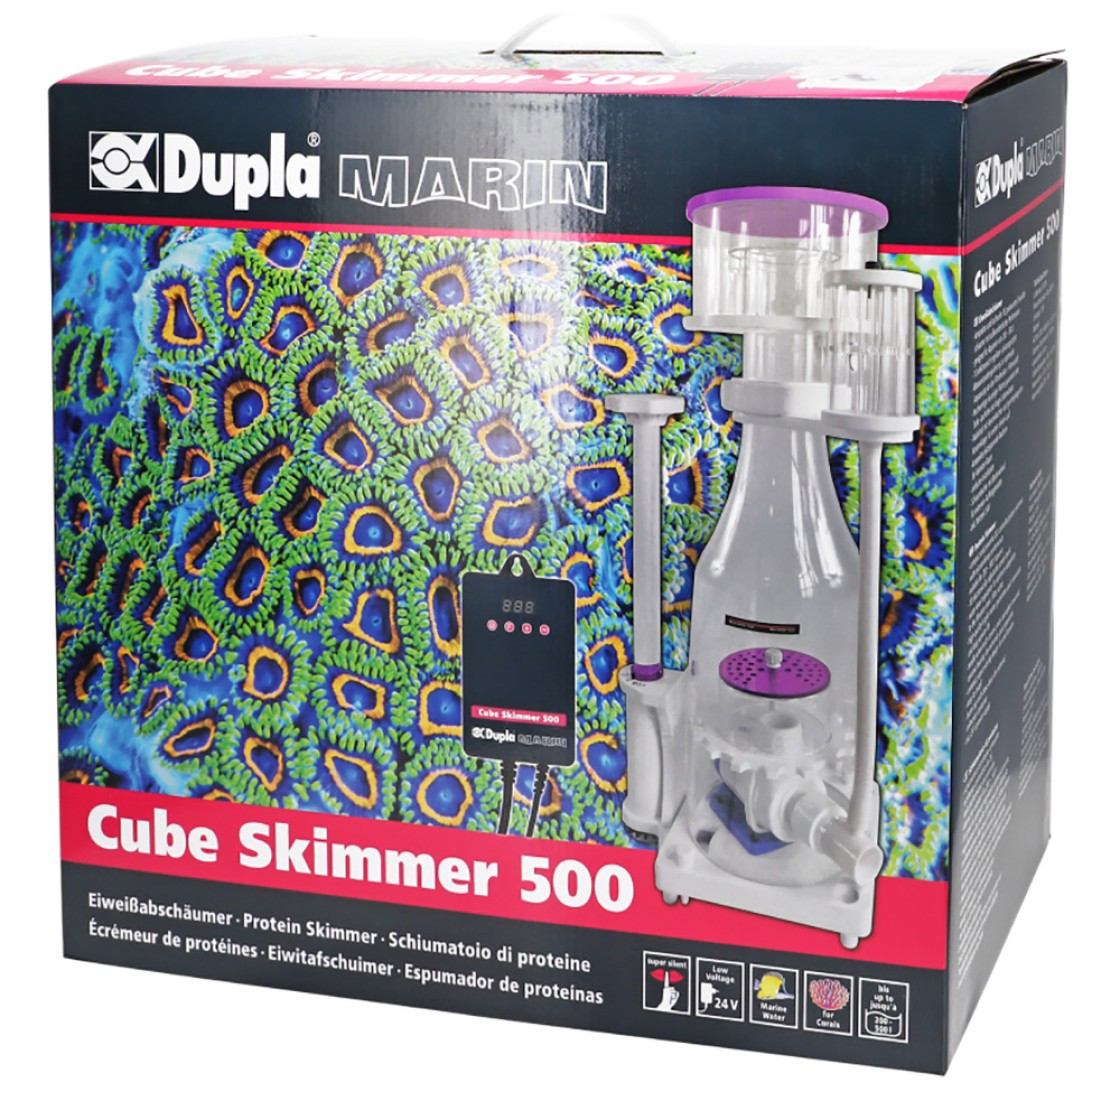 Dupla Marin Cube Skimmer 500 (82520)